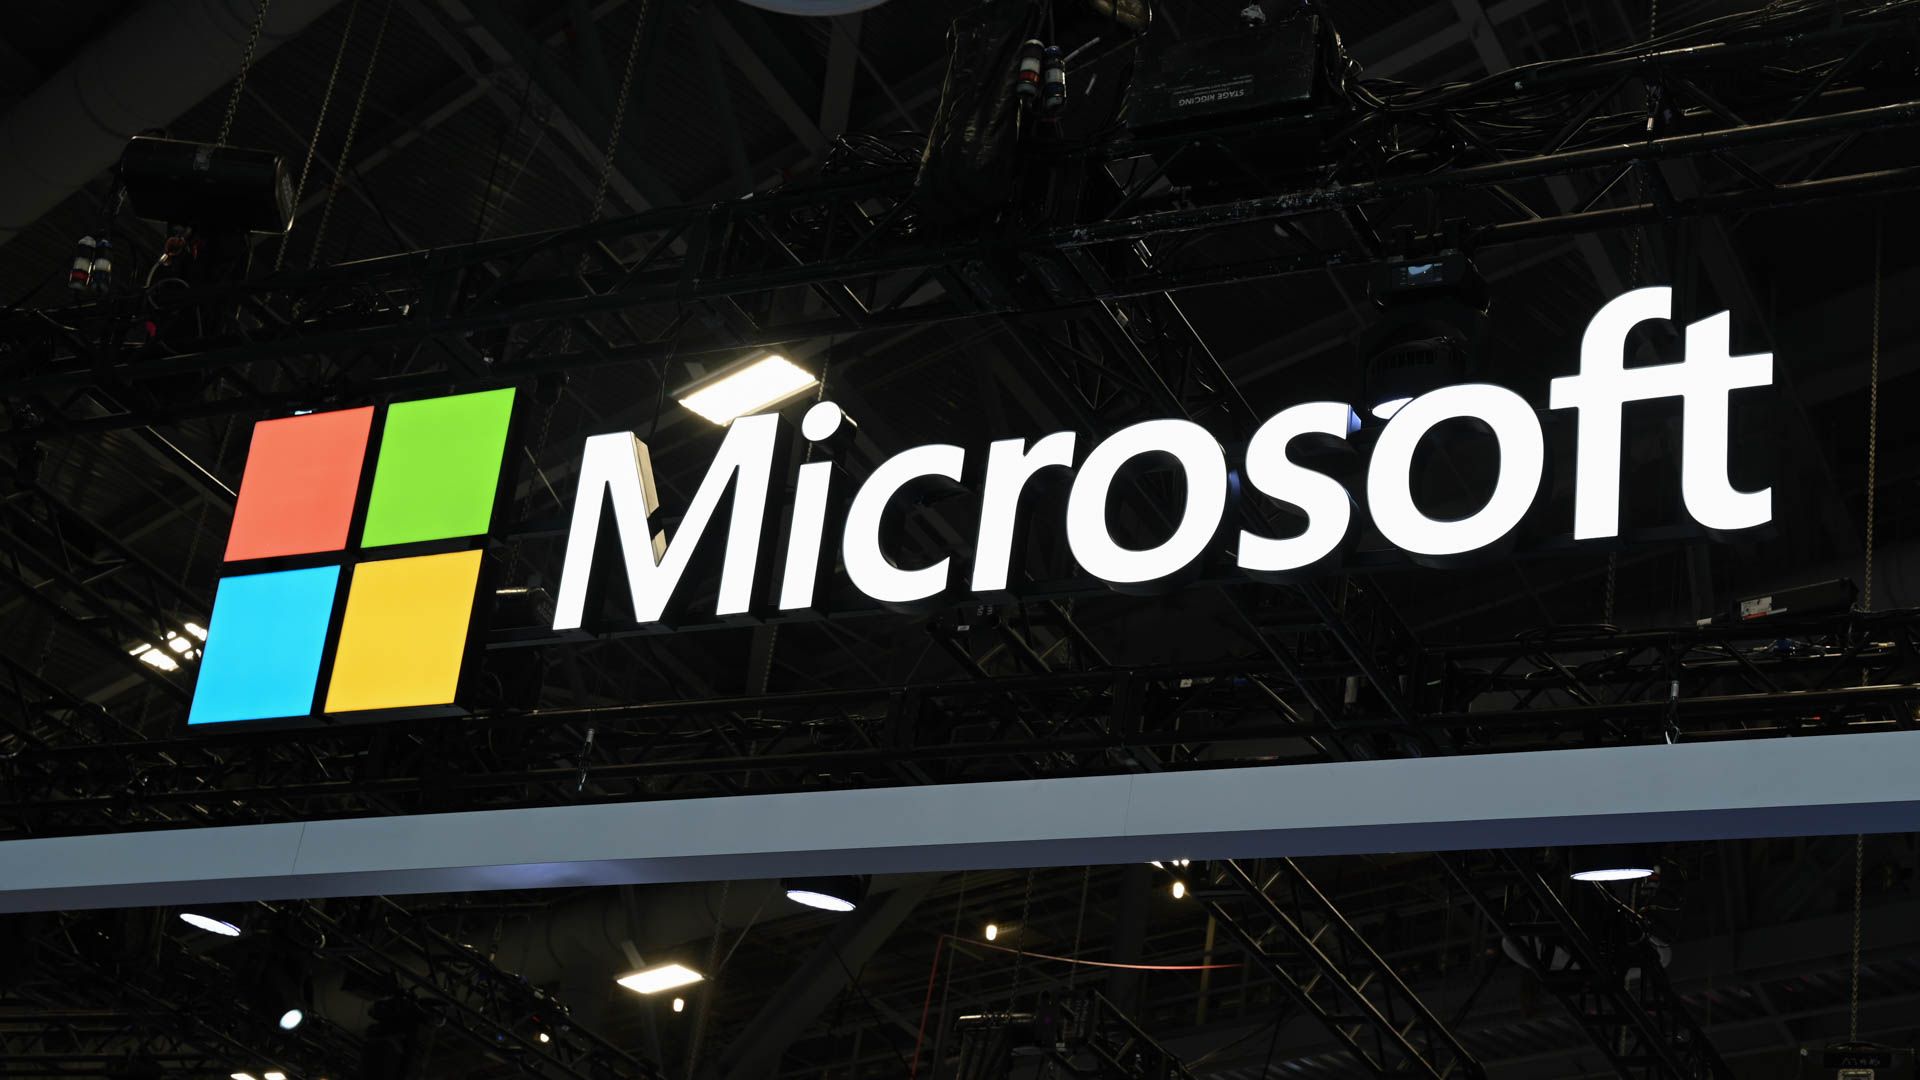 Microsoft Signage at CES 2023.